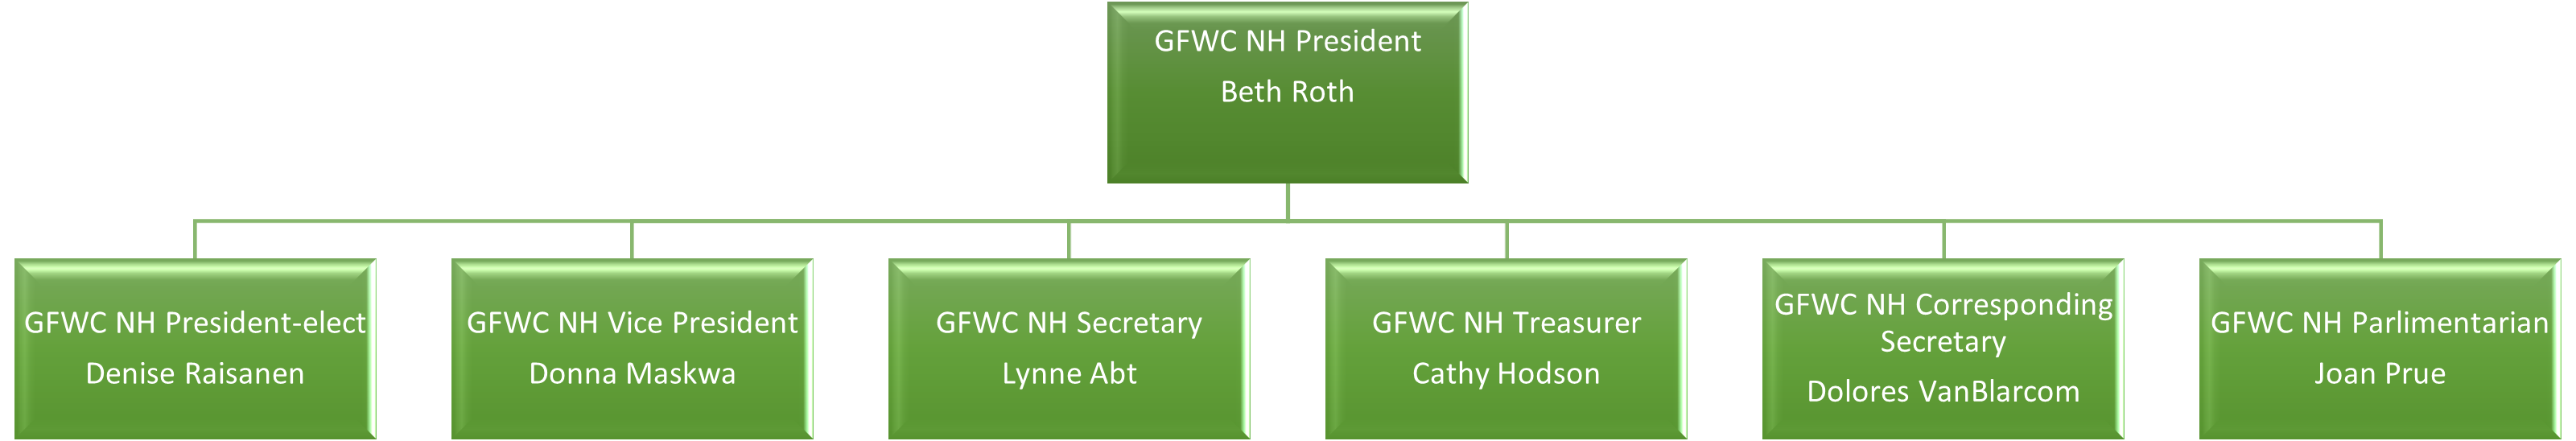 GFWC State Organizational Structure